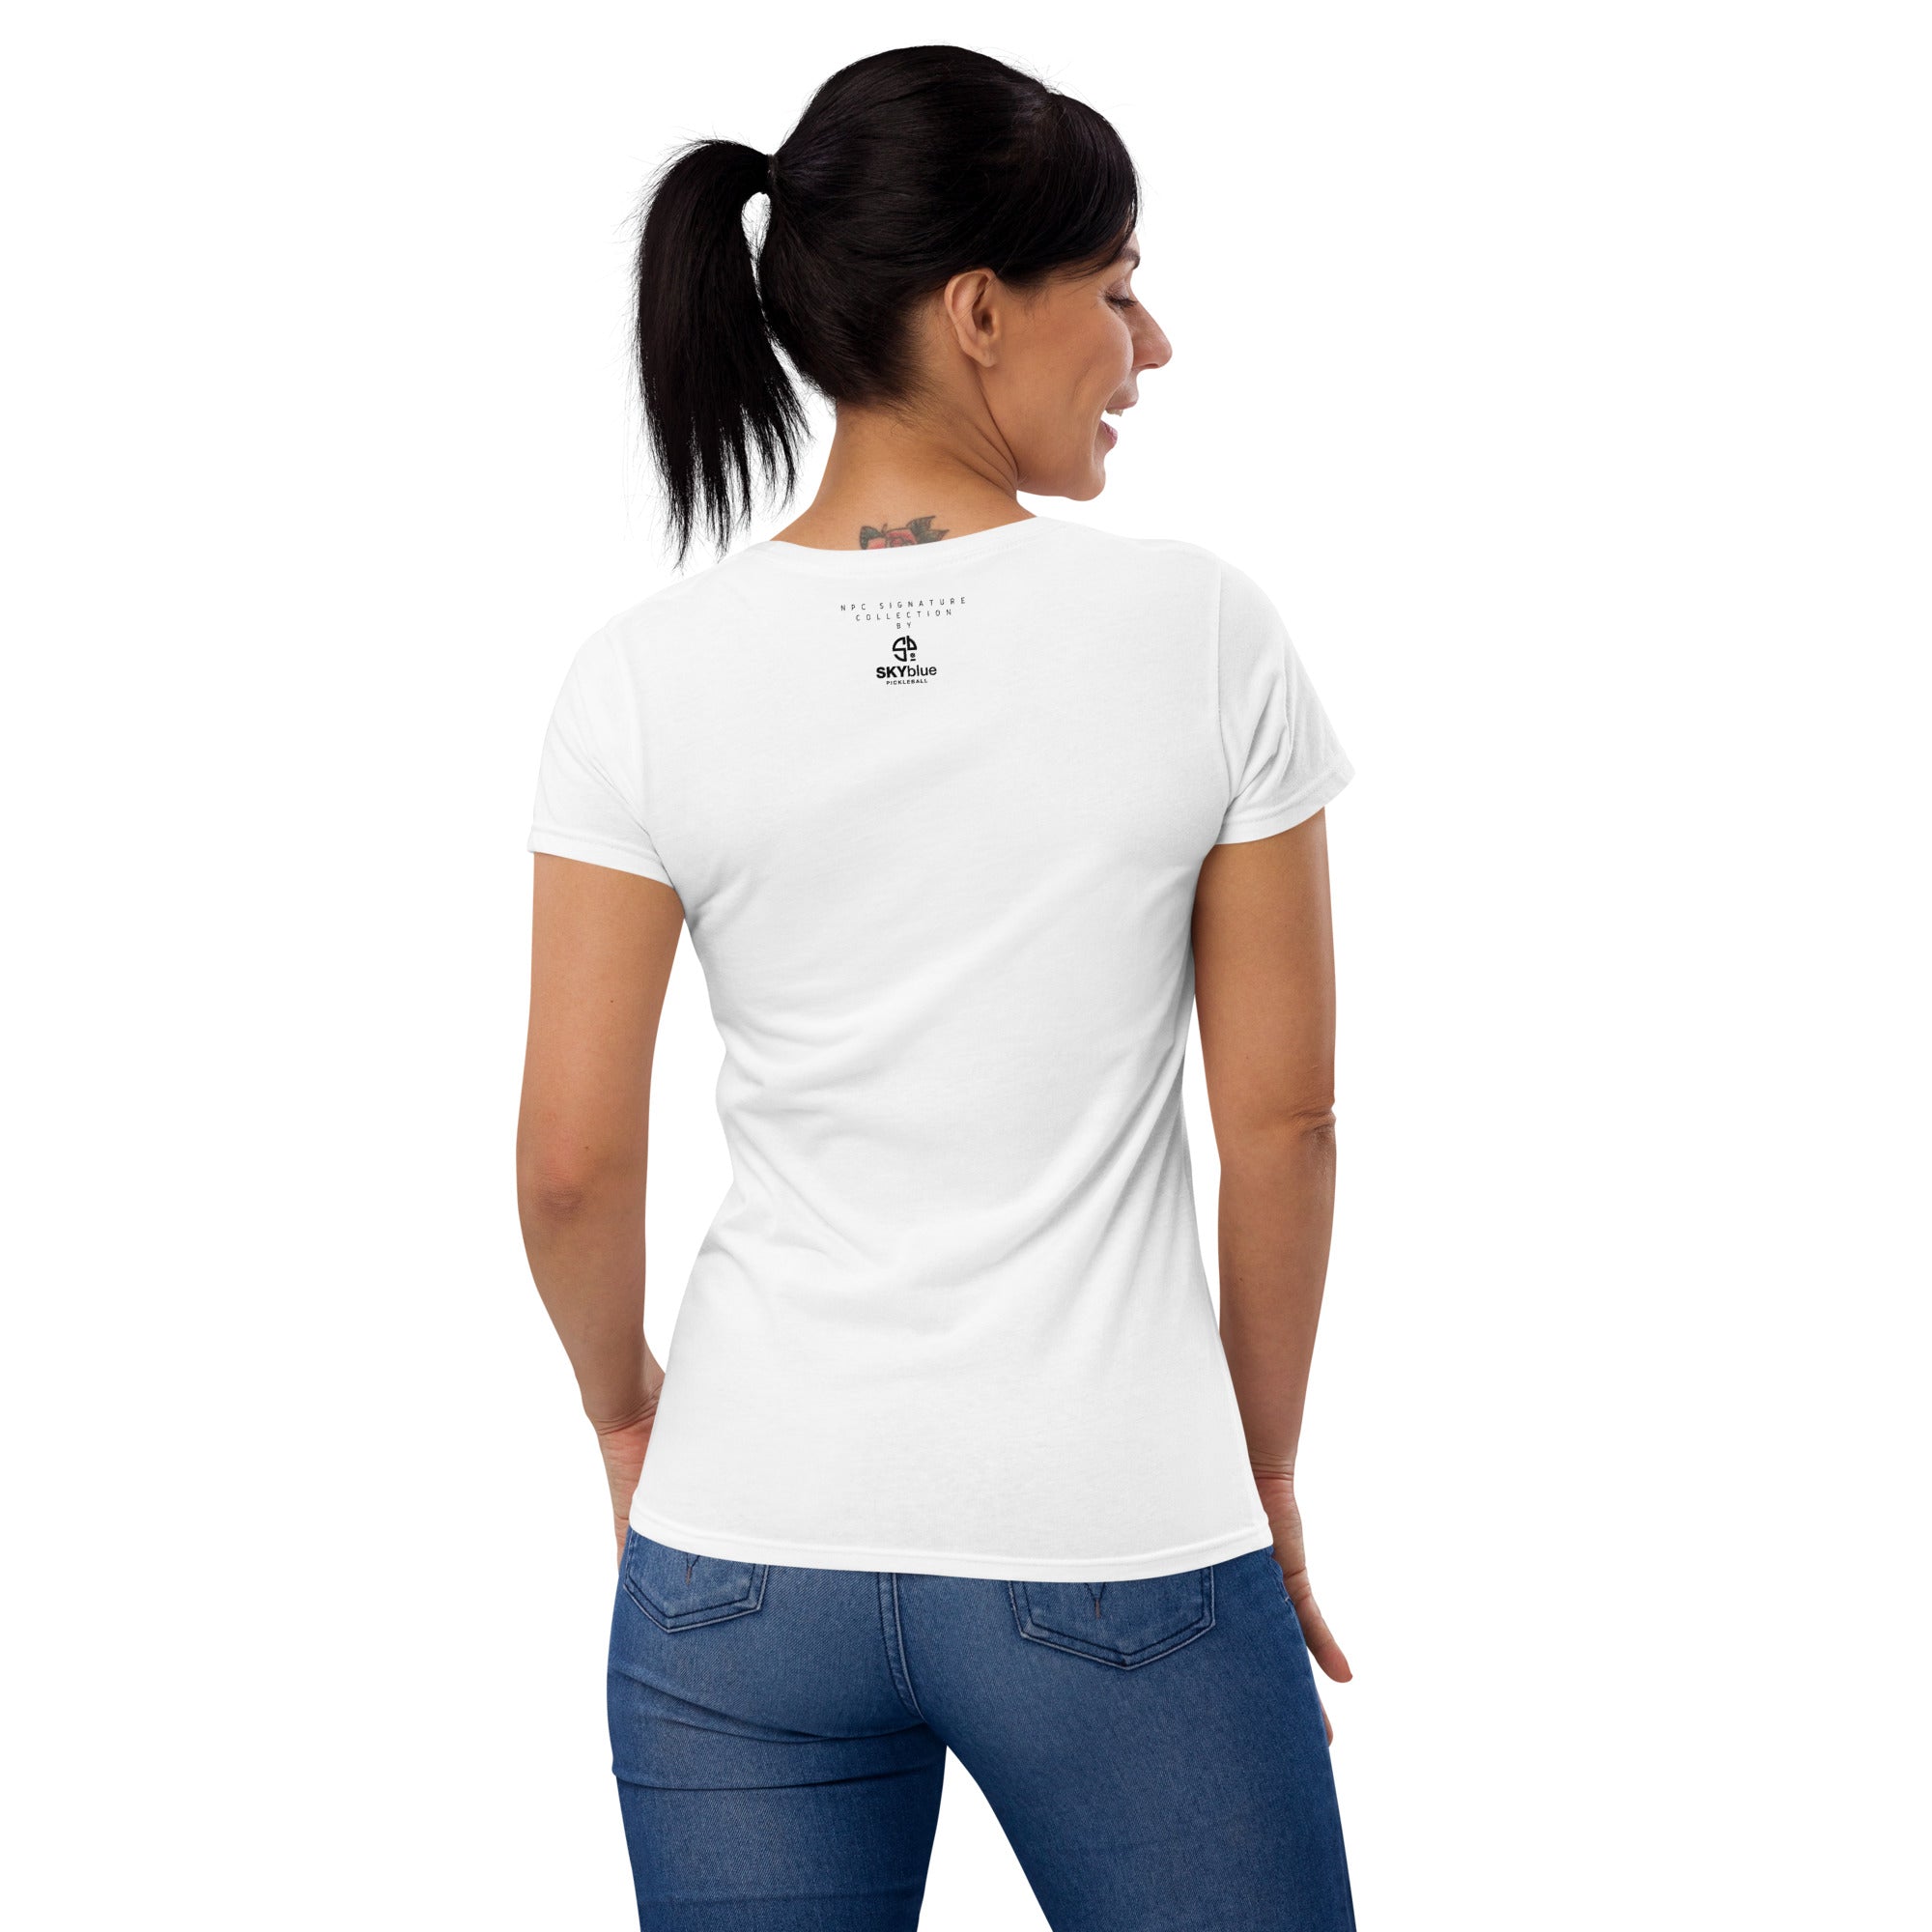 NPC Signature Collection "Painting Lines!" Women's Short Sleeve Cotton Shirt